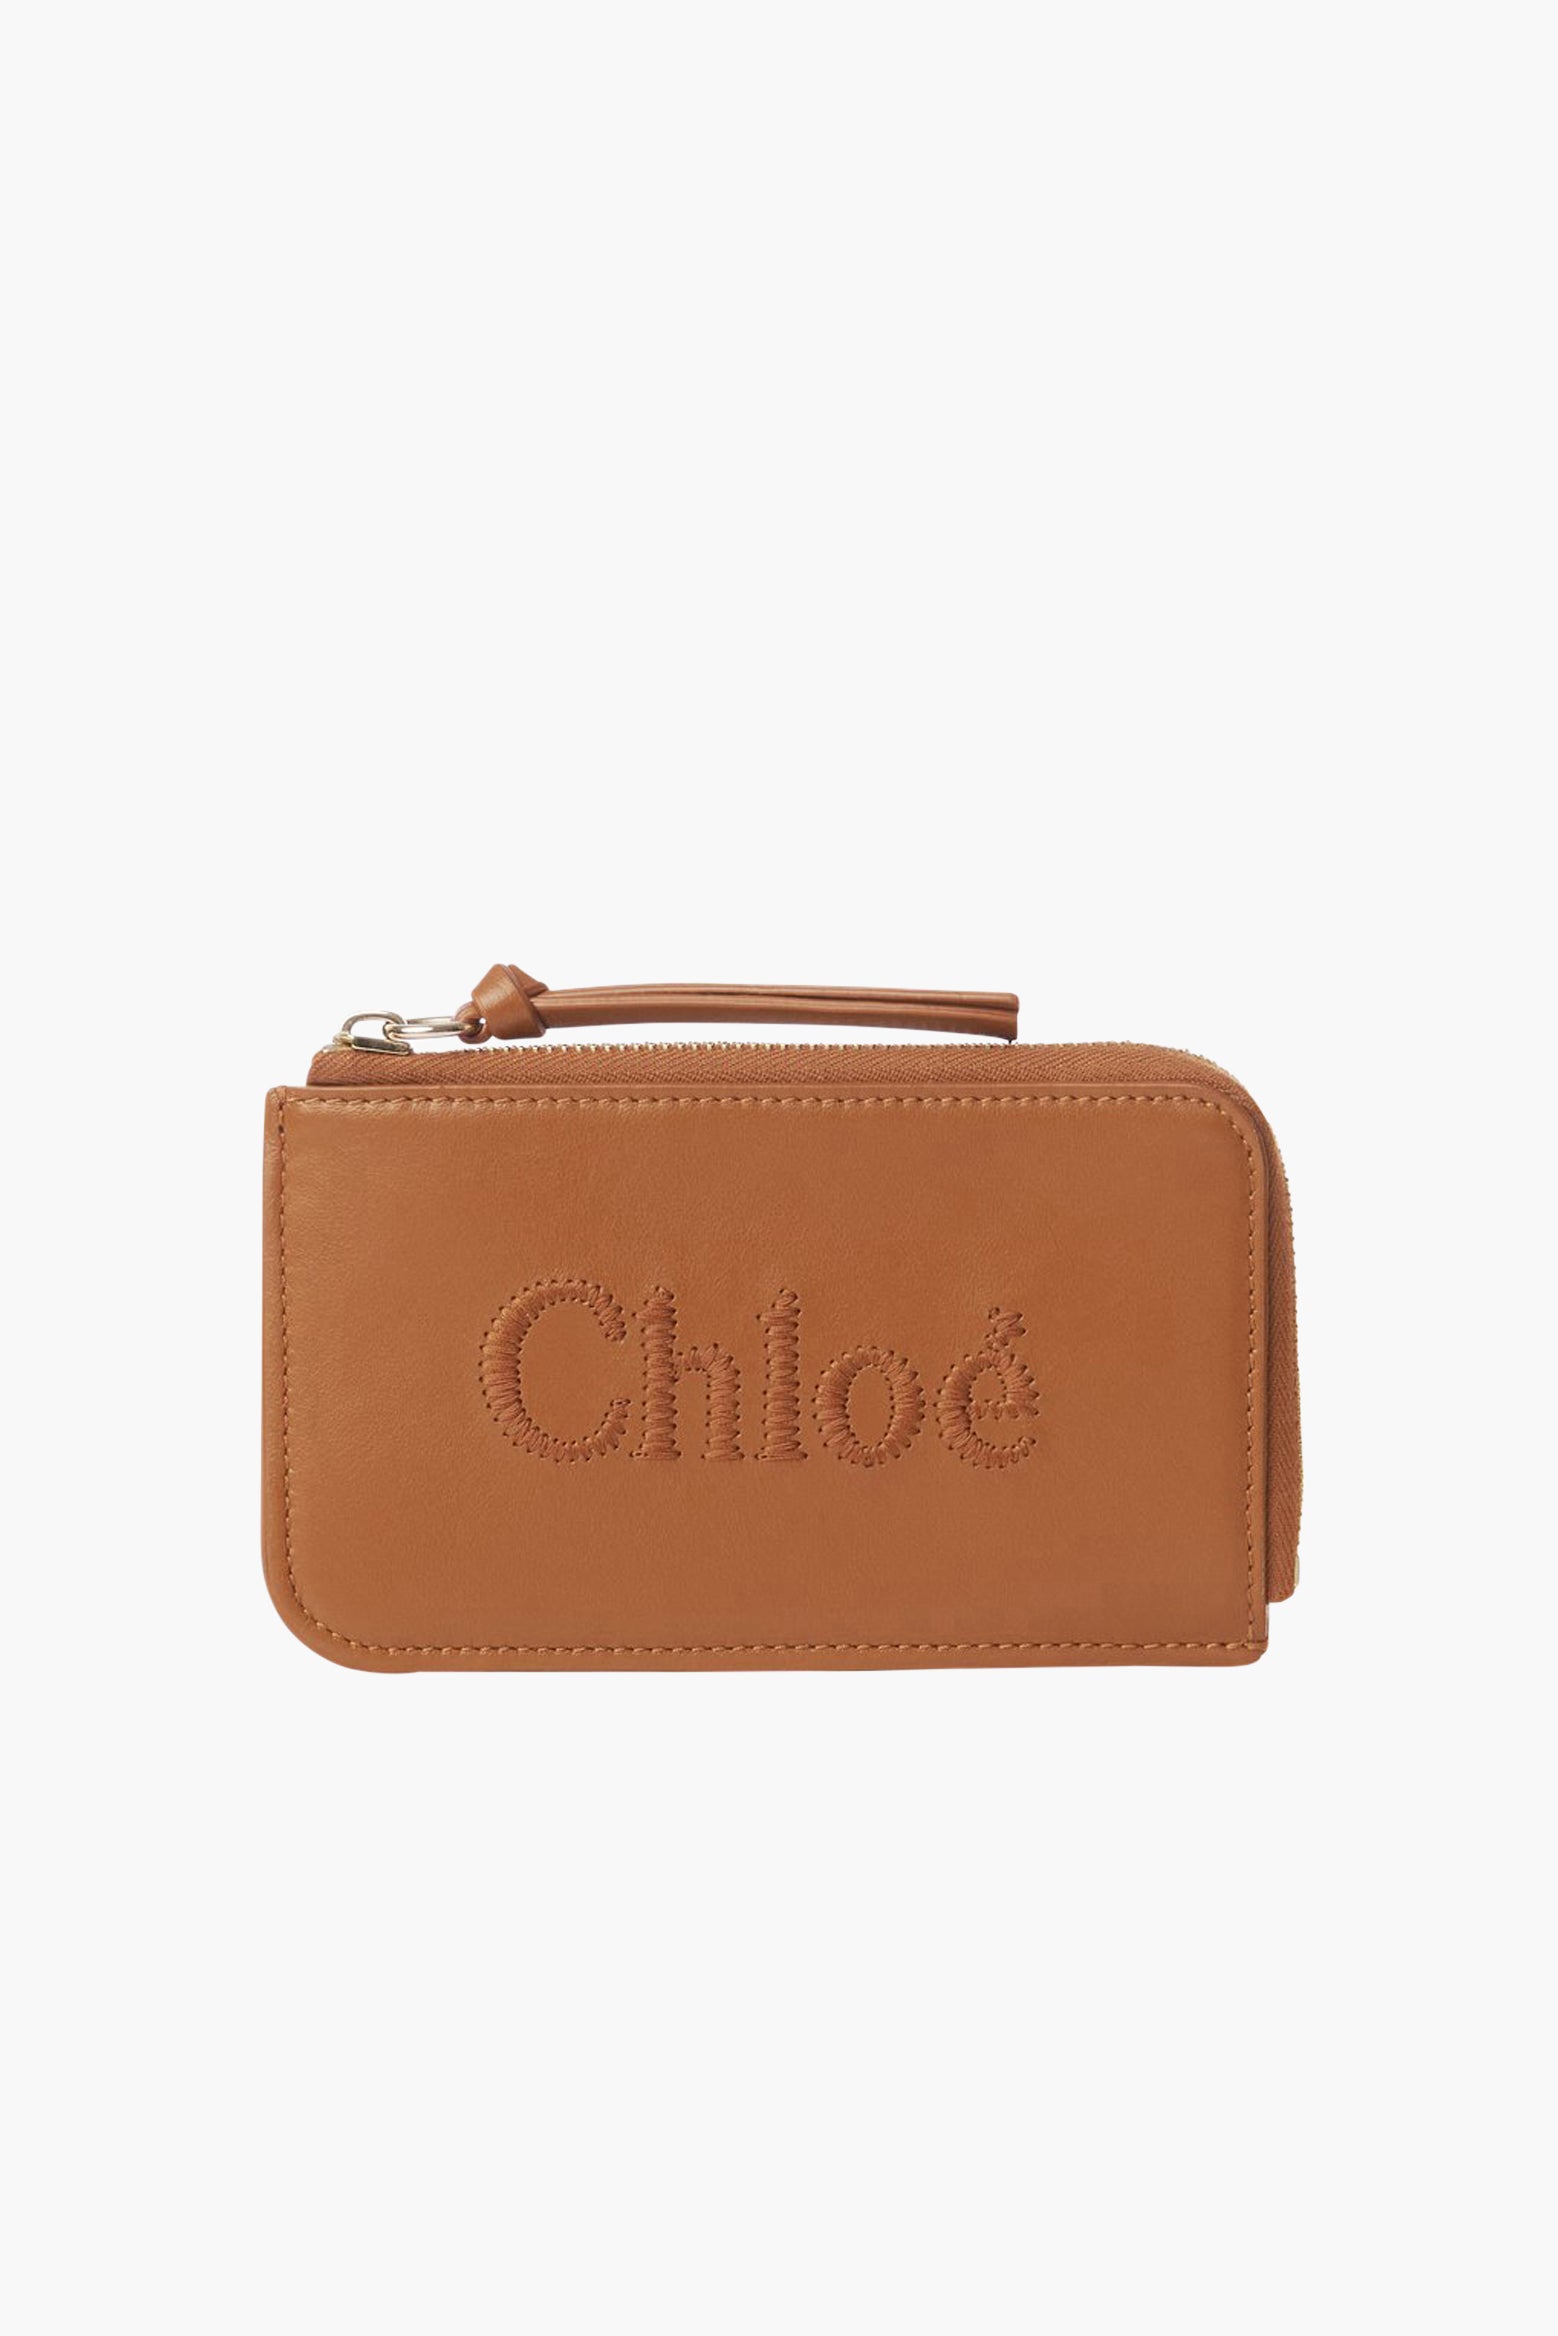 Women Wallet Simple Solid Leather Multi-Slots Small Purse Card Bag (Purple)  | eBay